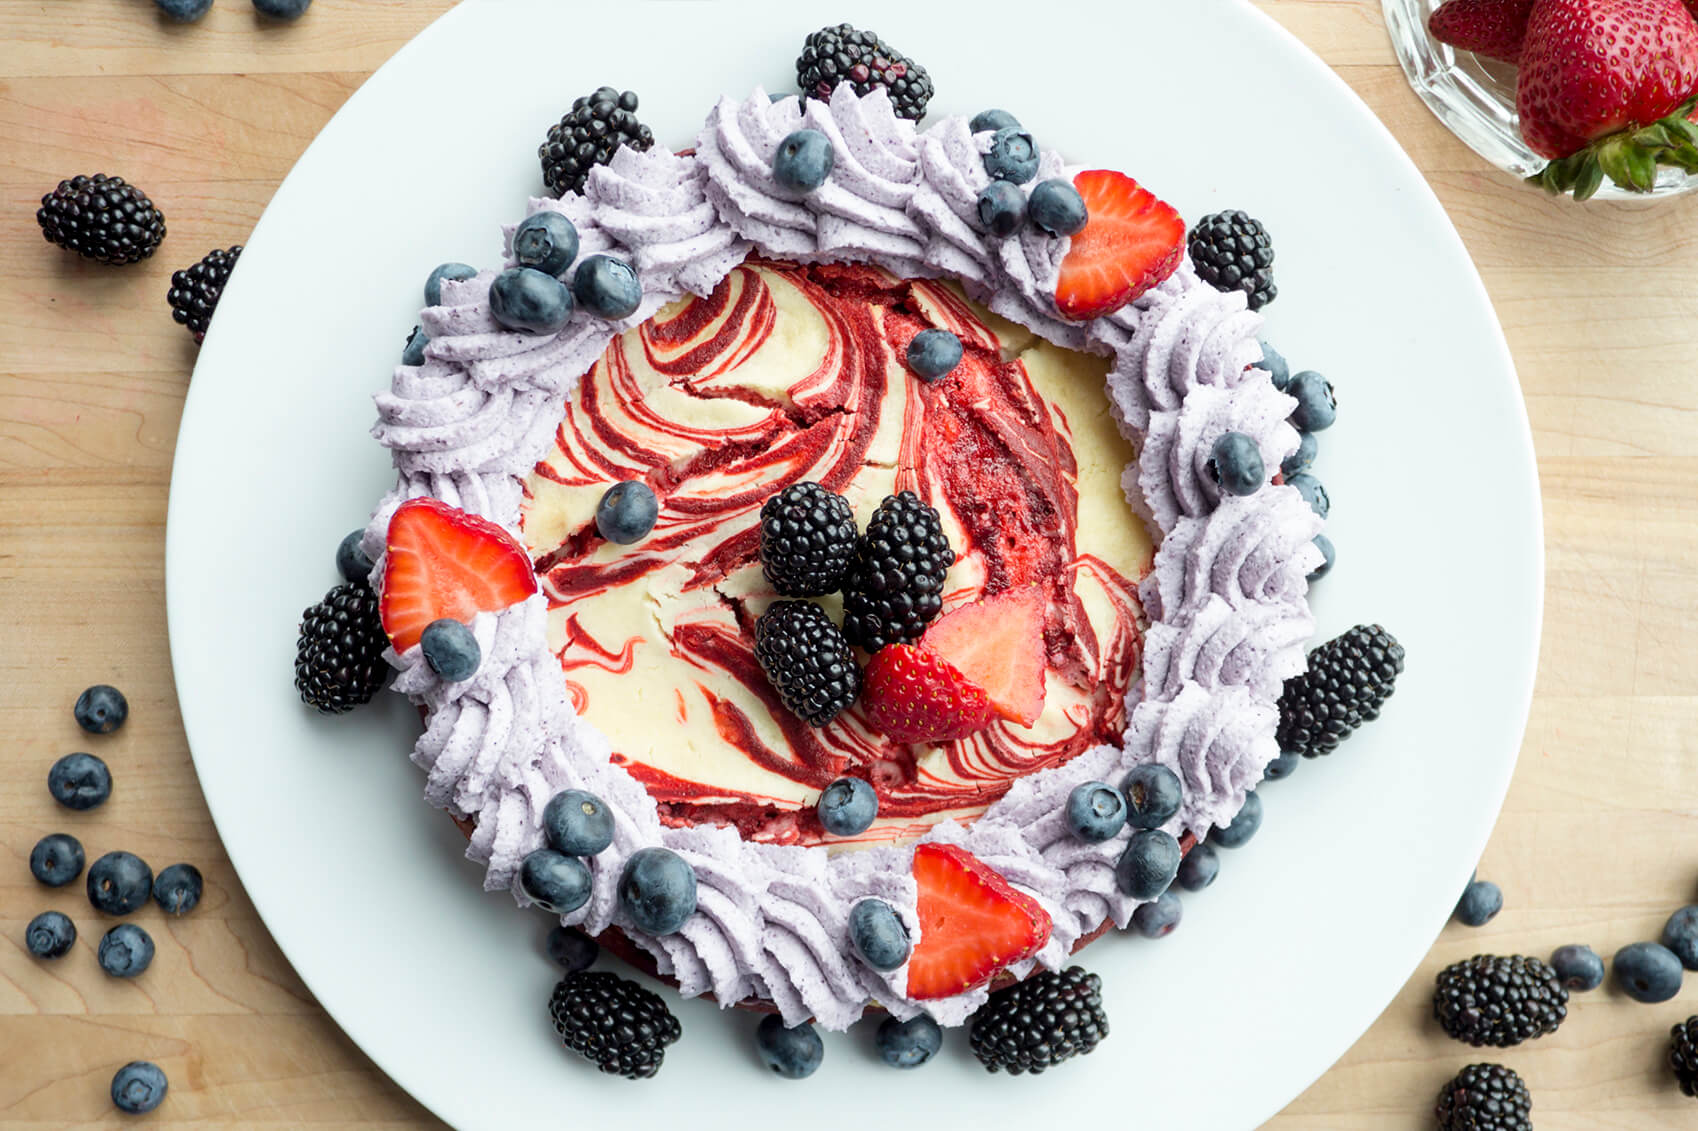 How To Make Red Velvet Cheesecake